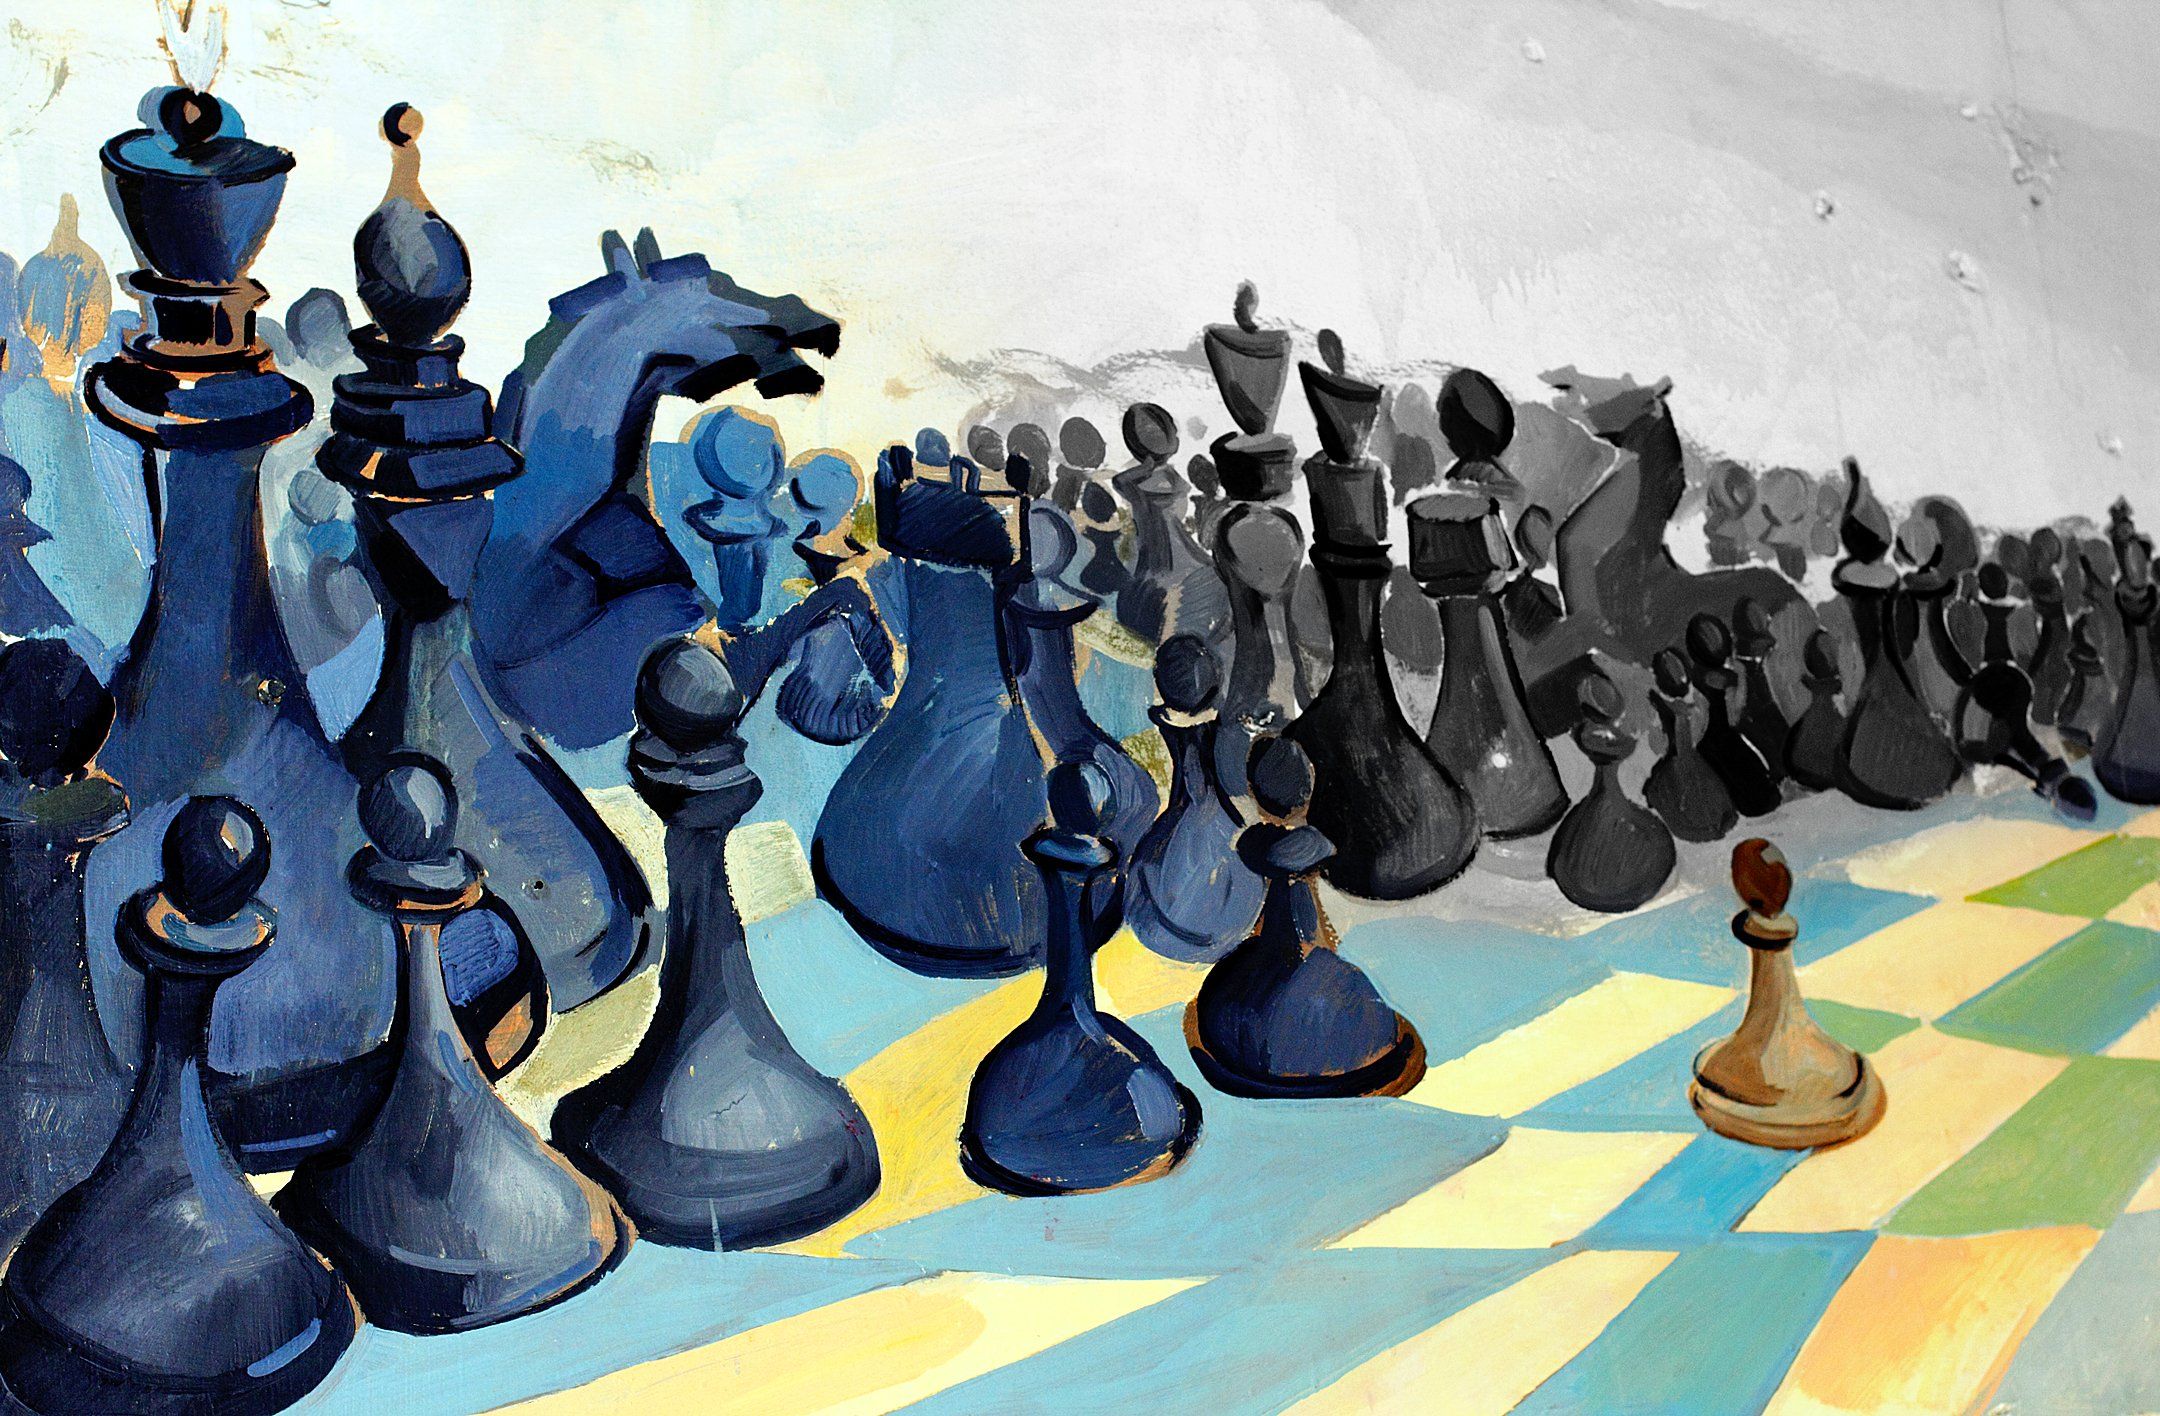 одиночка, концепция, фигуры, шахматы, outcast, loner, concept, figures, parties, chess, Дмитрий Салтыков